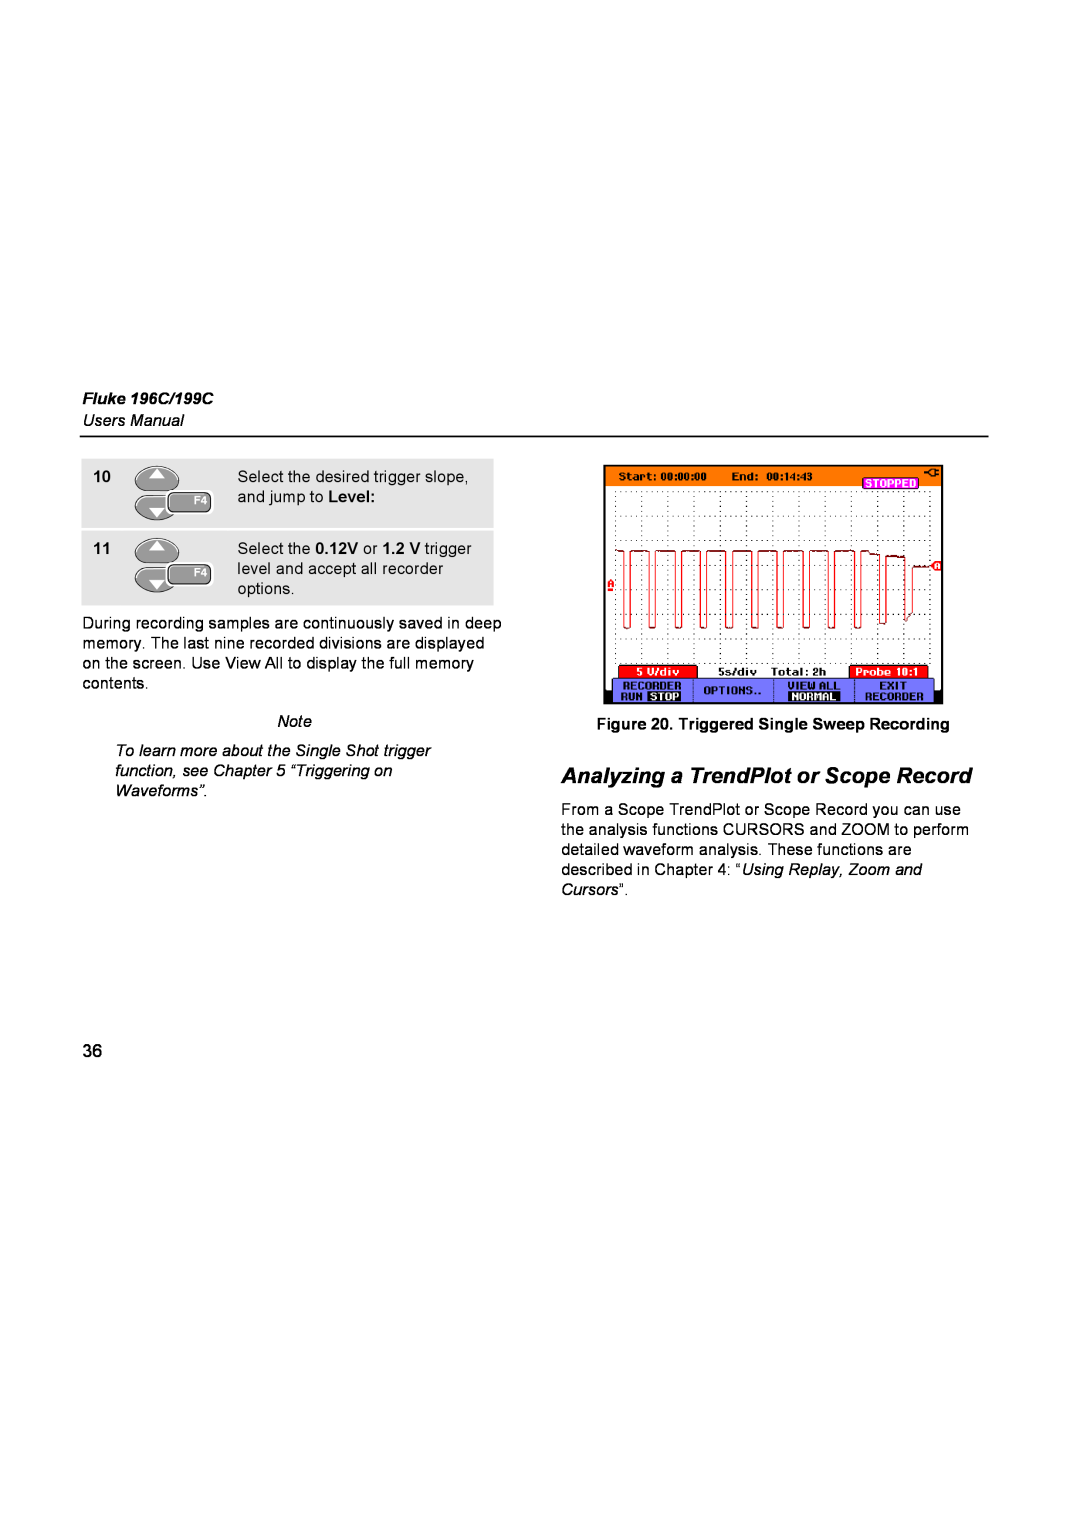 Fluke user manual Analyzing a TrendPlot or Scope Record, Triggered Single Sweep Recording, Fluke 196C/199C 